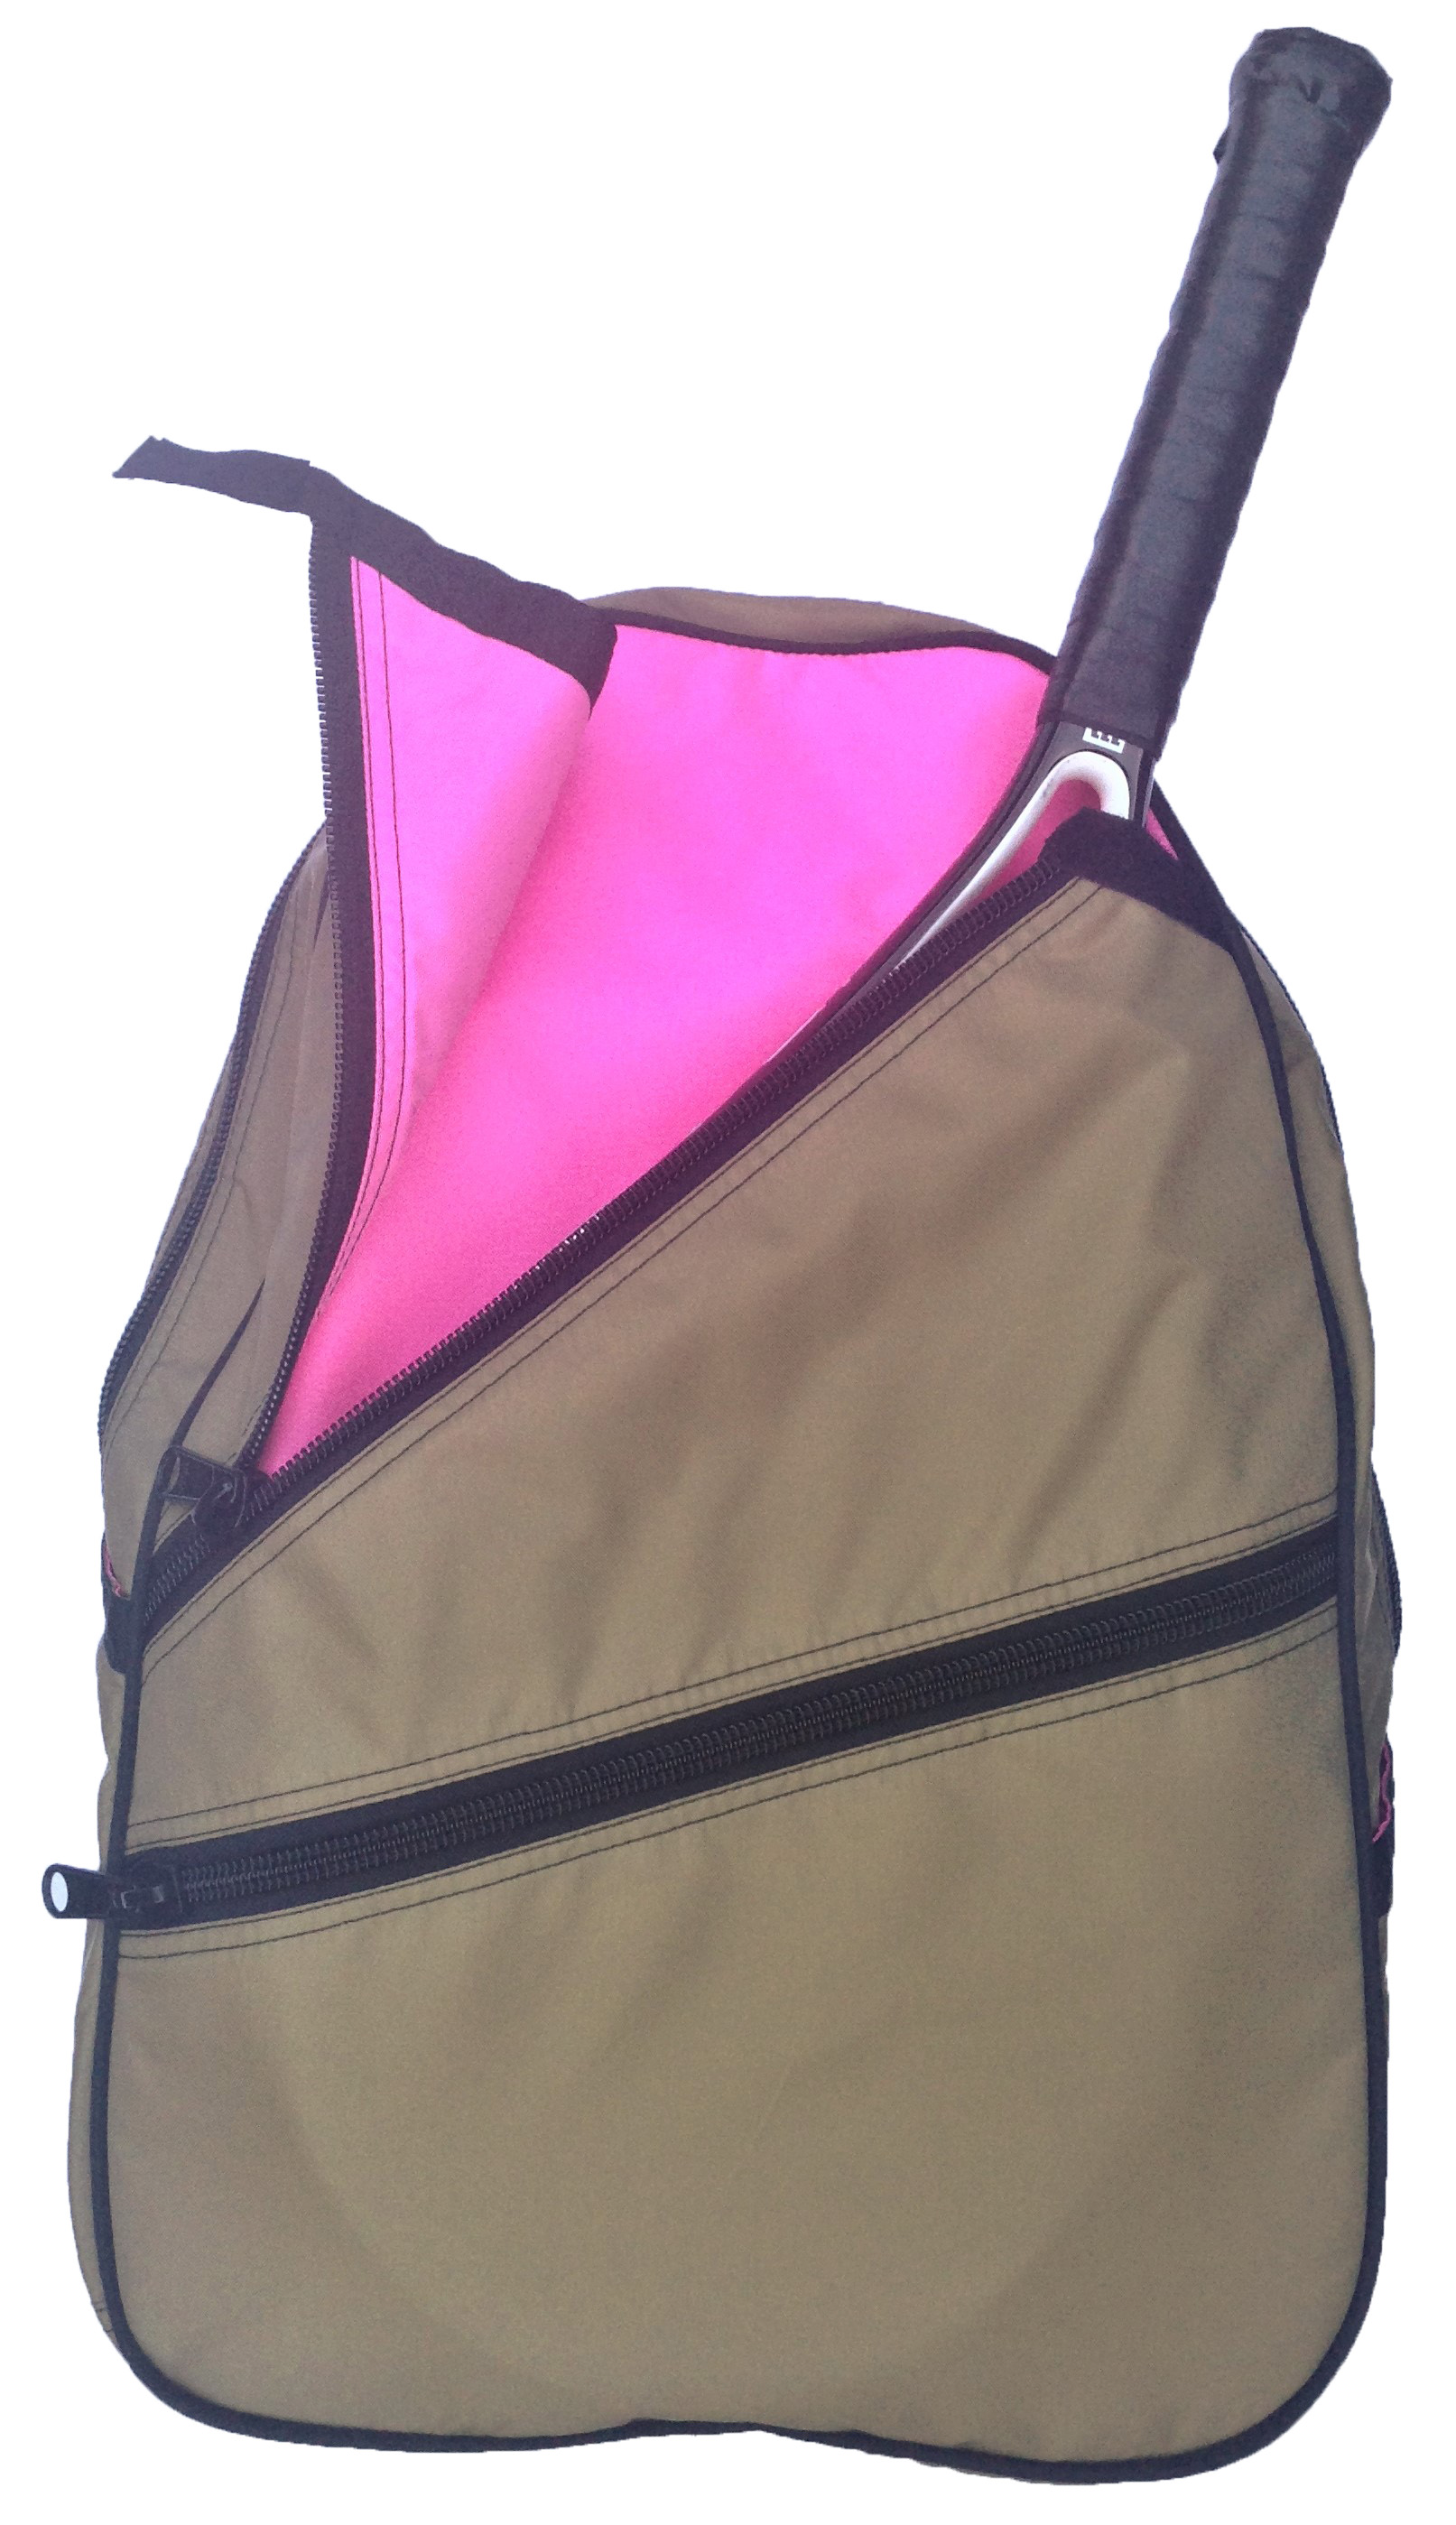 Maggie Mather Tennis Backpack (Khaki/Blooming Pink)